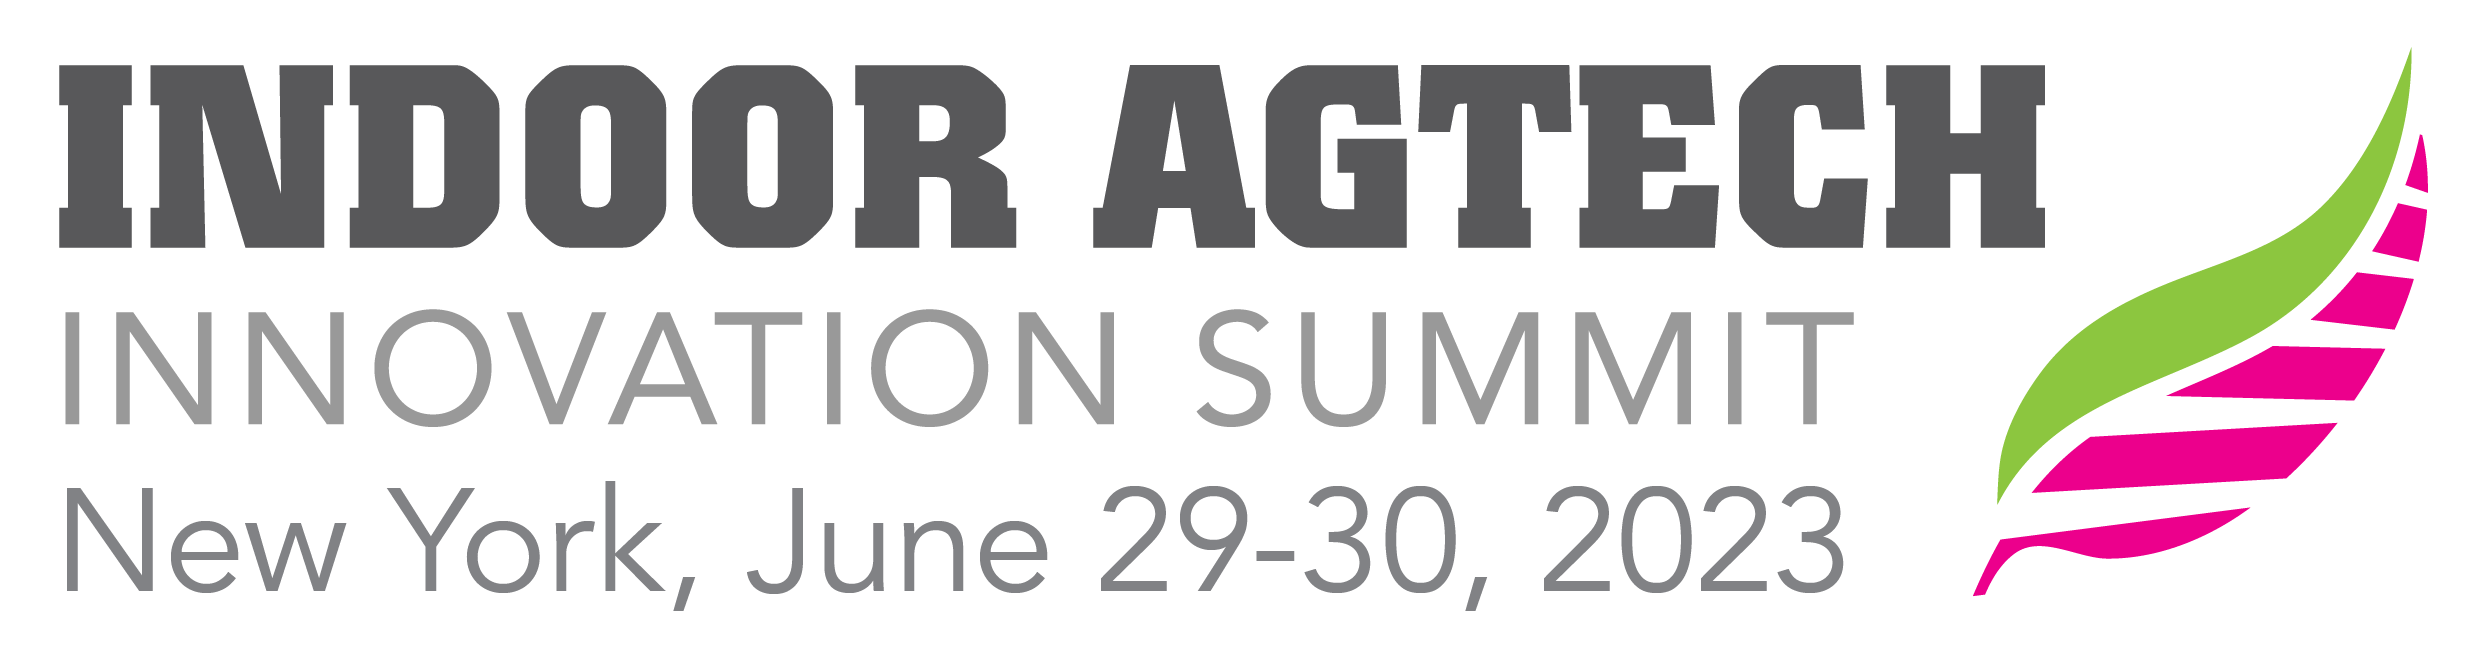 Indoor AgTech Innovation Summit 2023 logo